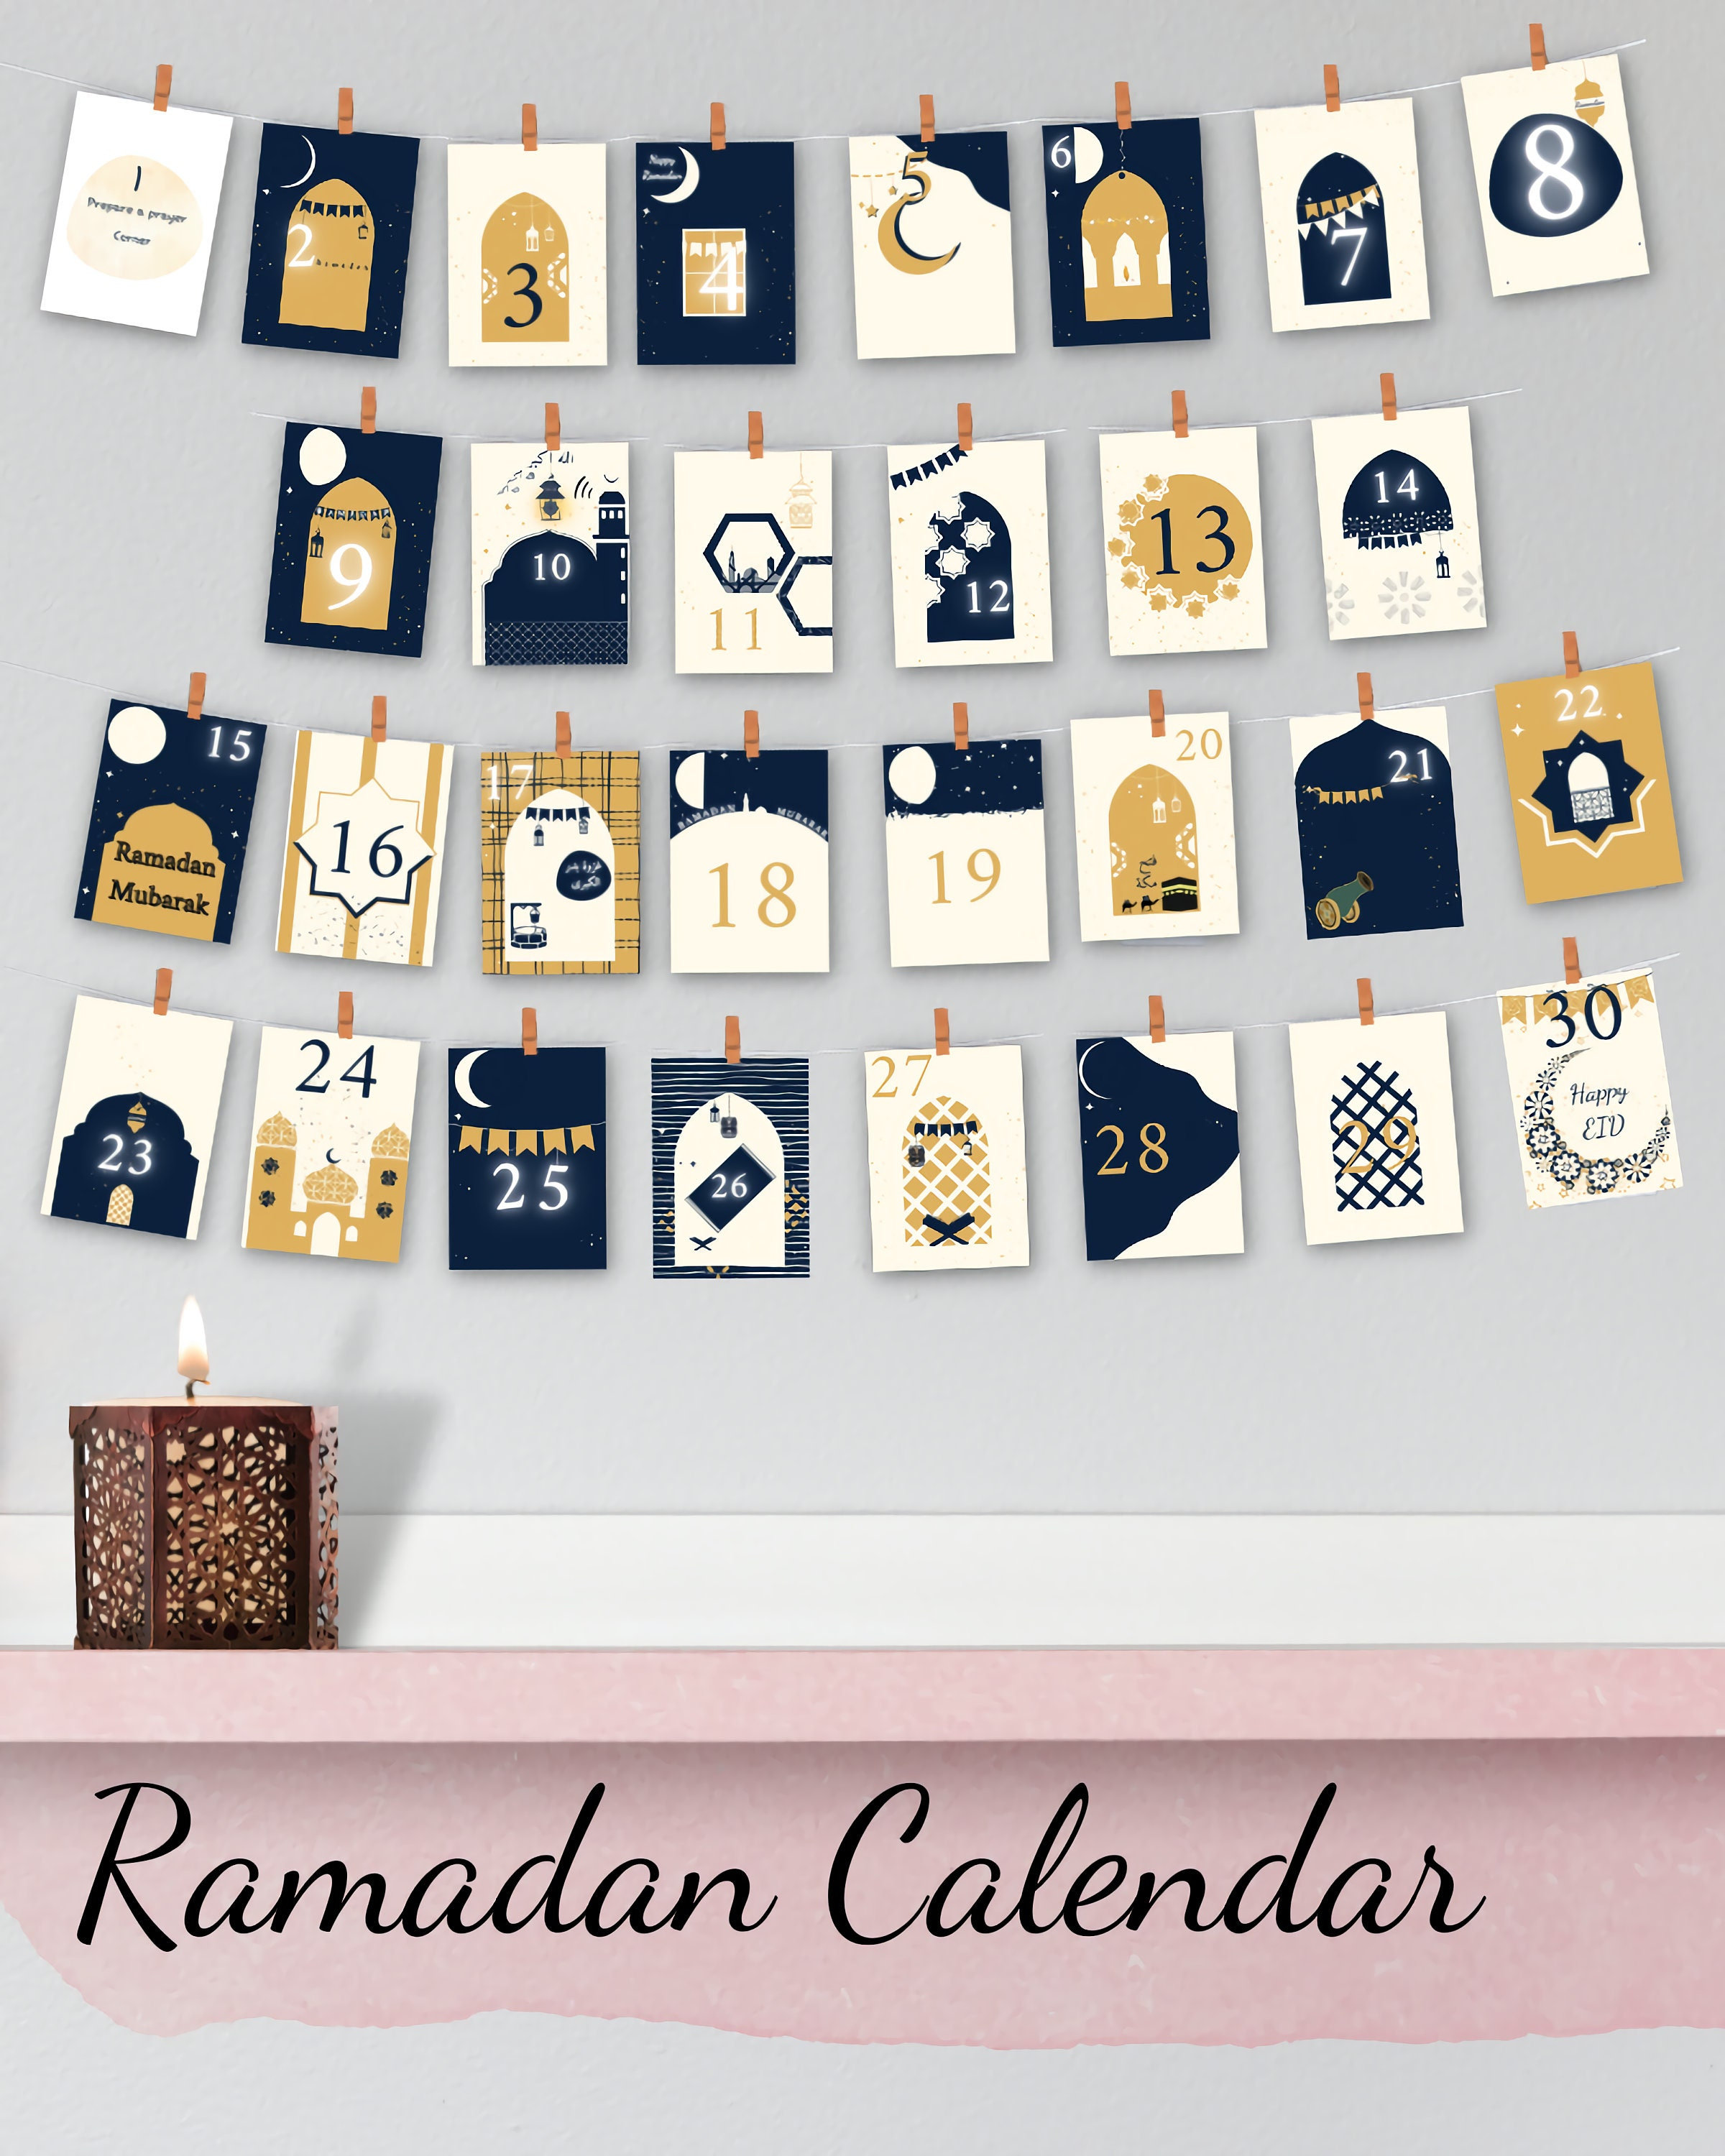 Calendrier du Ramadan, Bonnes actions du Ramadan, Calendrier du compte à  rebours du Ramadan, Imprimable, Avent du Ramadan, Coin du Ramadan, Enfants  musulmans -  France